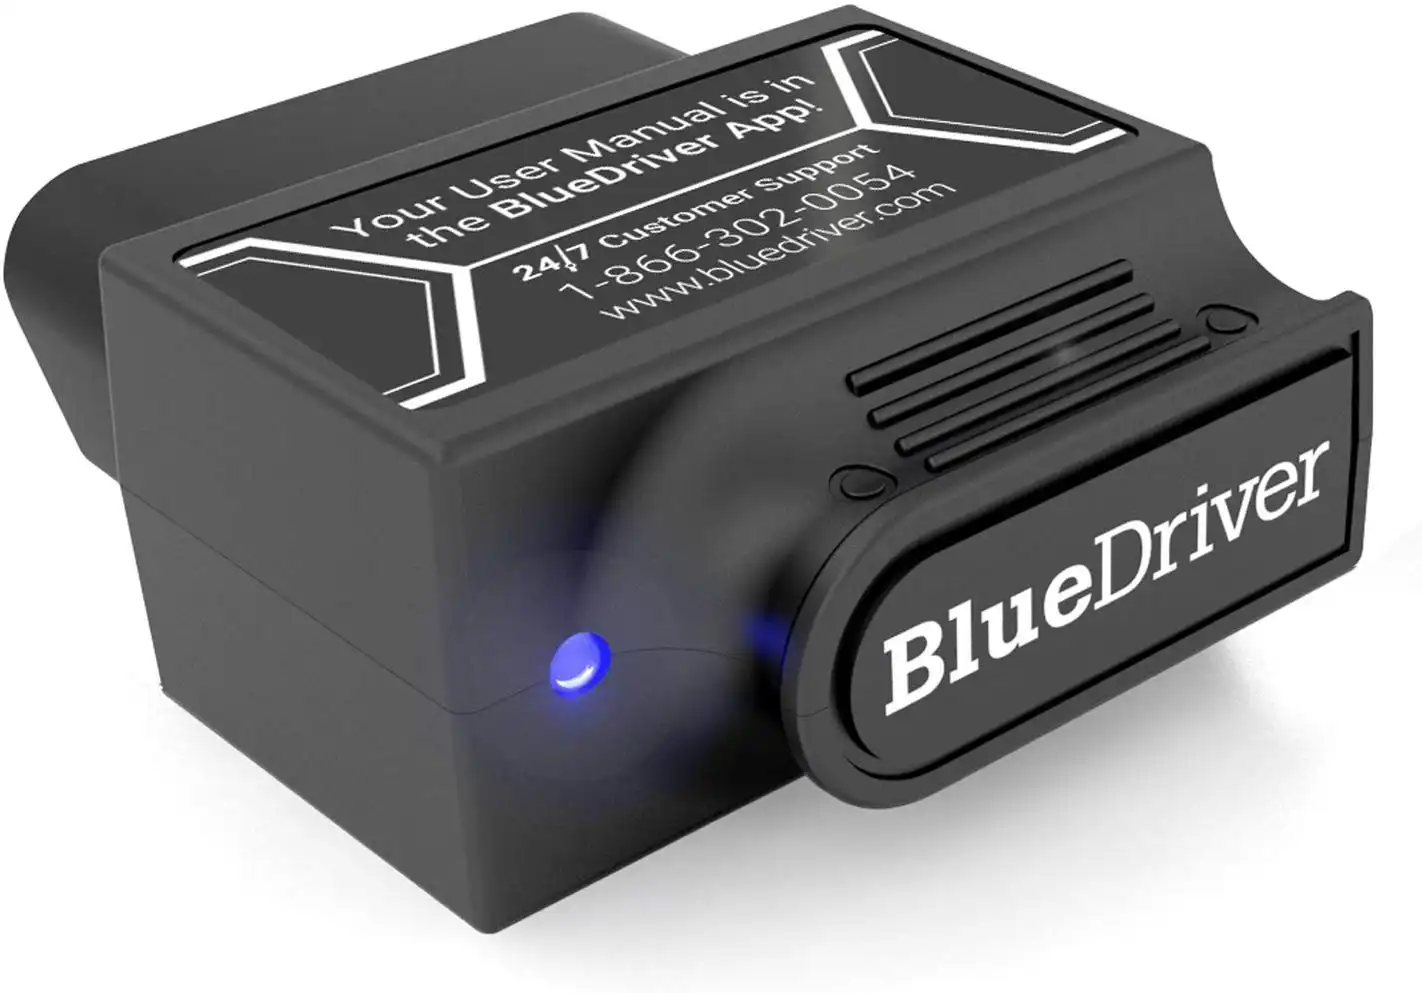 BlueDriver Bluetooth Professional OBDII OBD2 Diagnostic Scan Tool